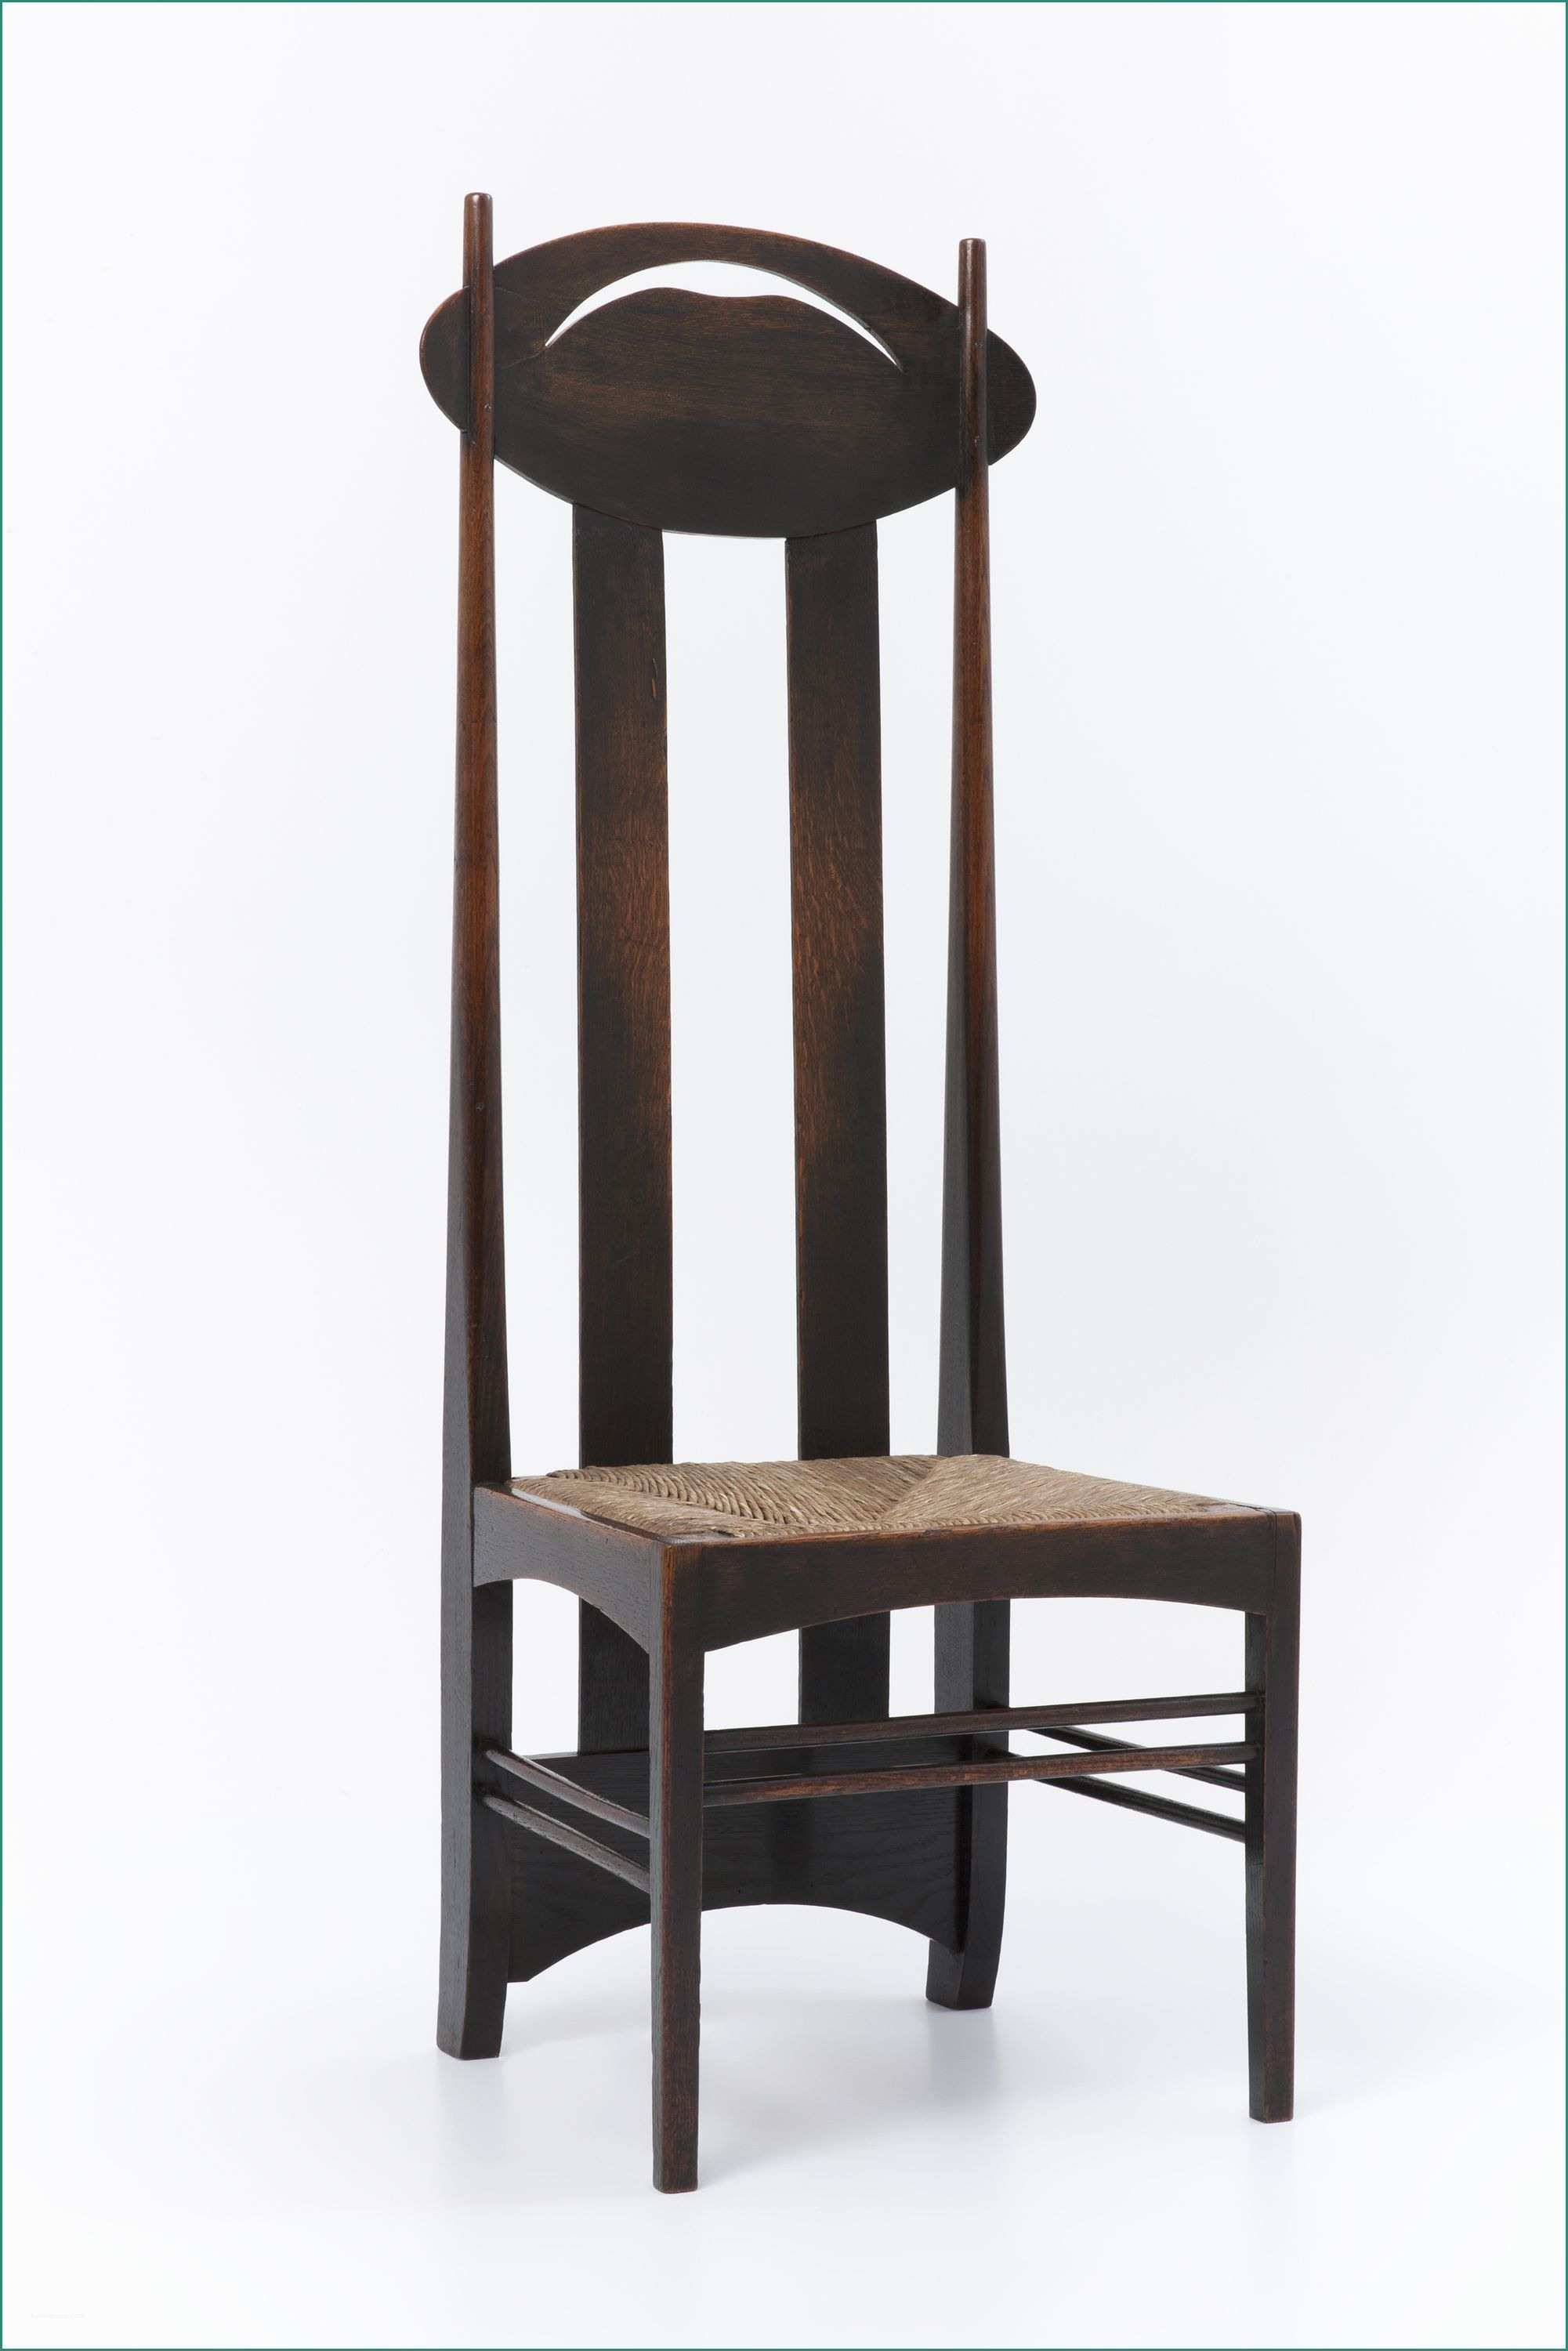 Alvar Aalto Sedie E P 195] Charles Rennie Mackintosh Scottish 1894 1958 Argyle Chair